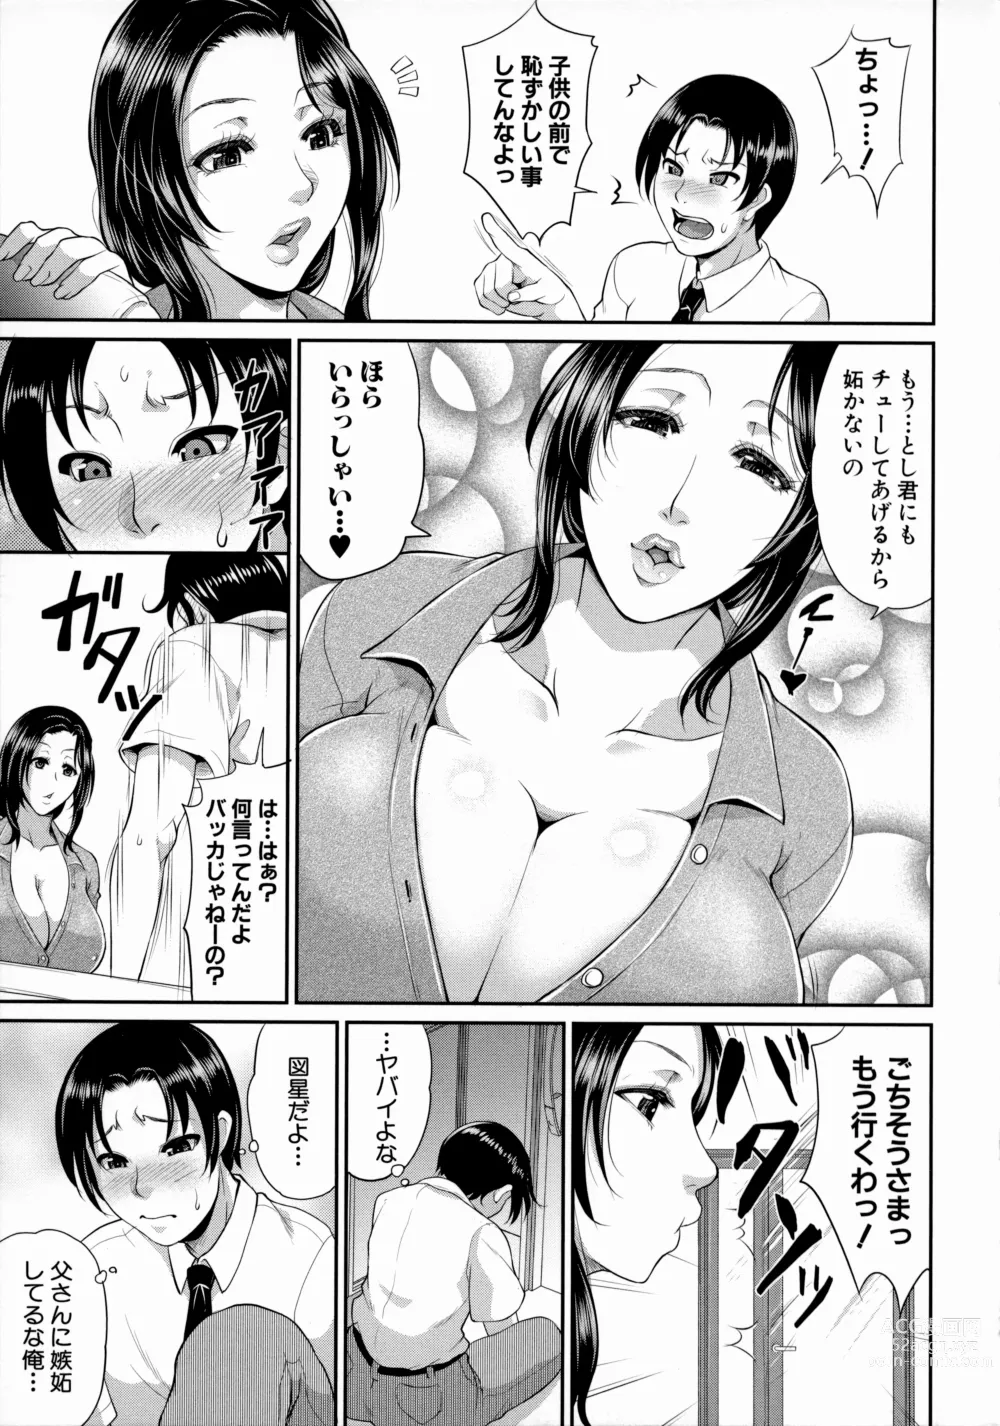 Page 5 of manga Uruwashi no Wife